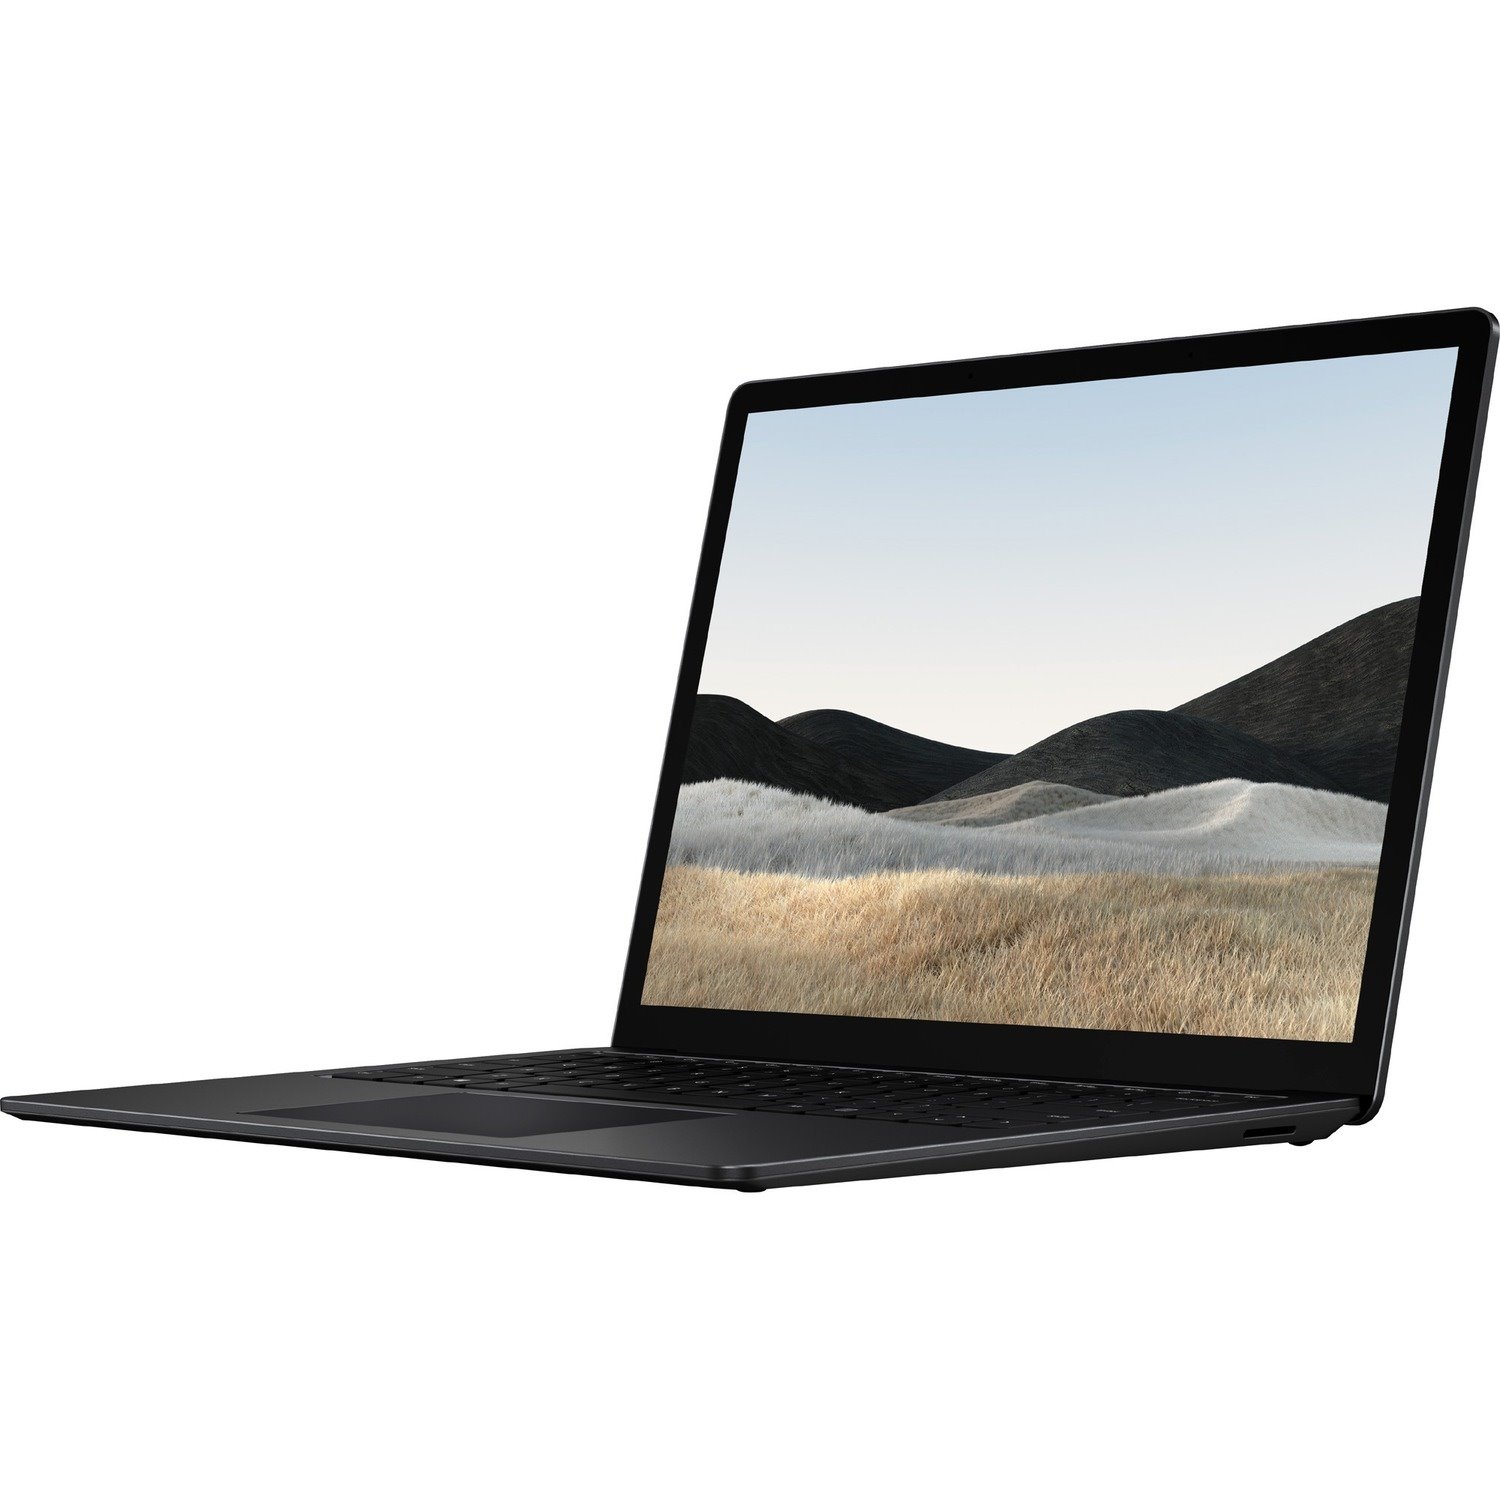 Microsoft Surface Laptop 4 34.3 cm (13.5") Touchscreen Notebook - 2256 x 1504 - Intel Core i5 - 8 GB Total RAM - 512 GB SSD - Matte Black